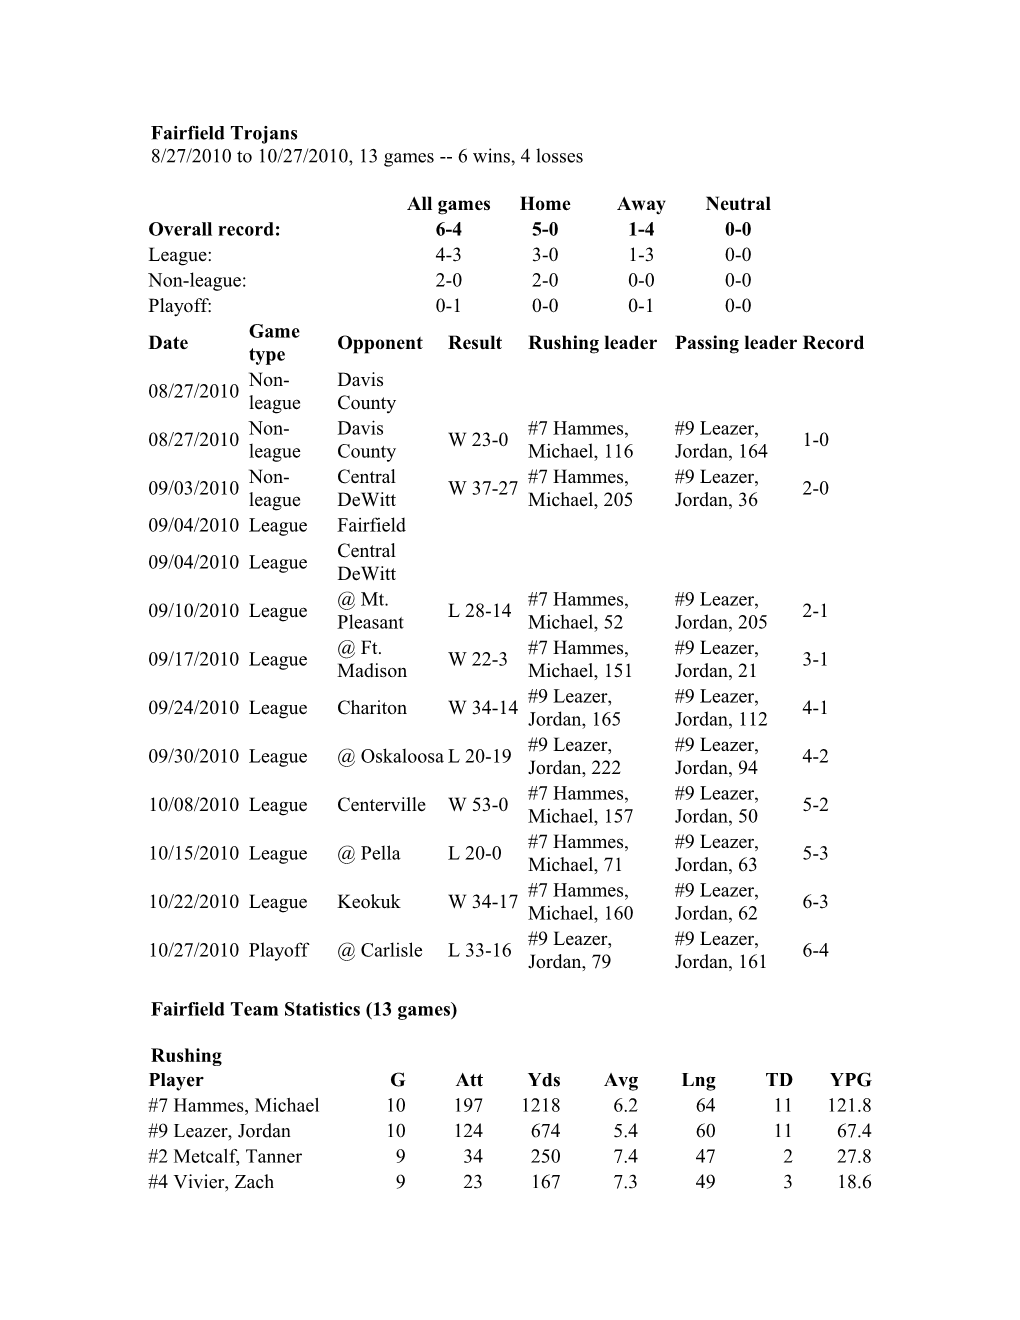 Fairfield Team Statistics (13 Games)